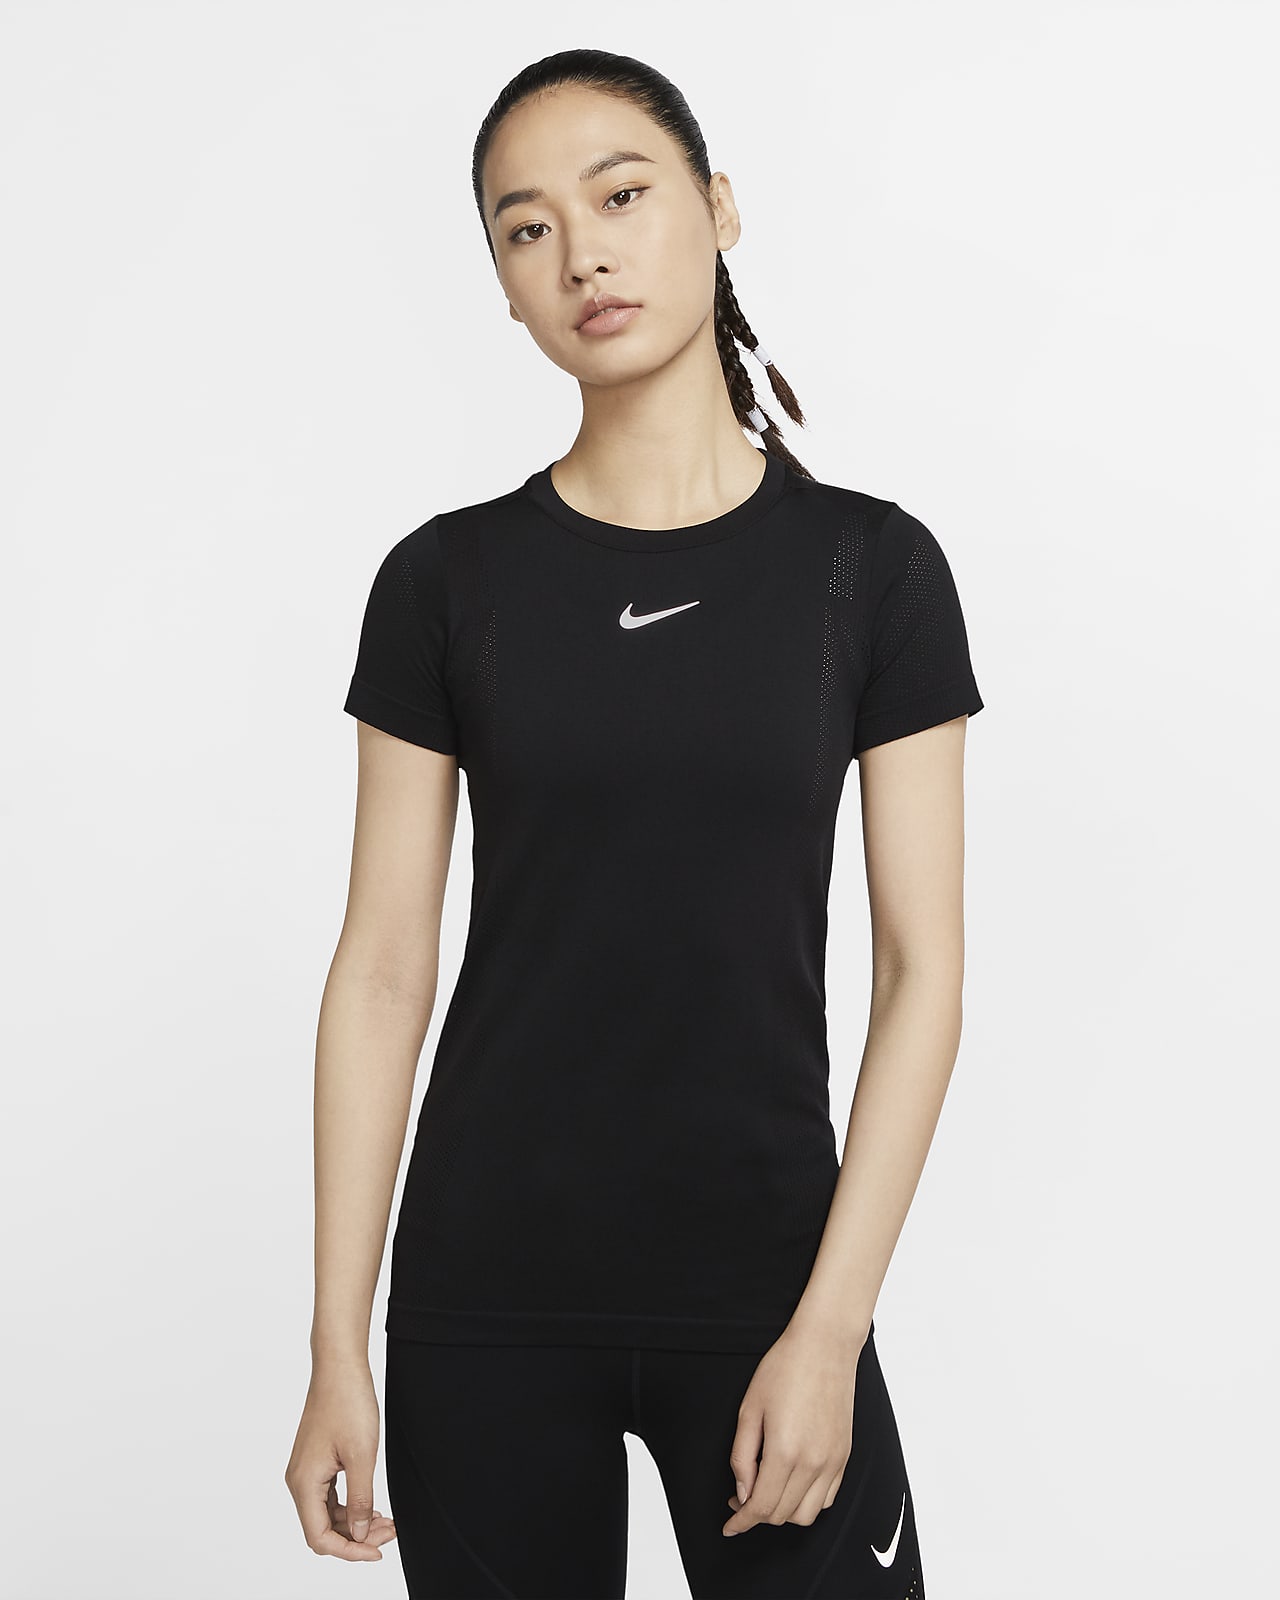 Nike Infinite Women's Running Top. Nike JP